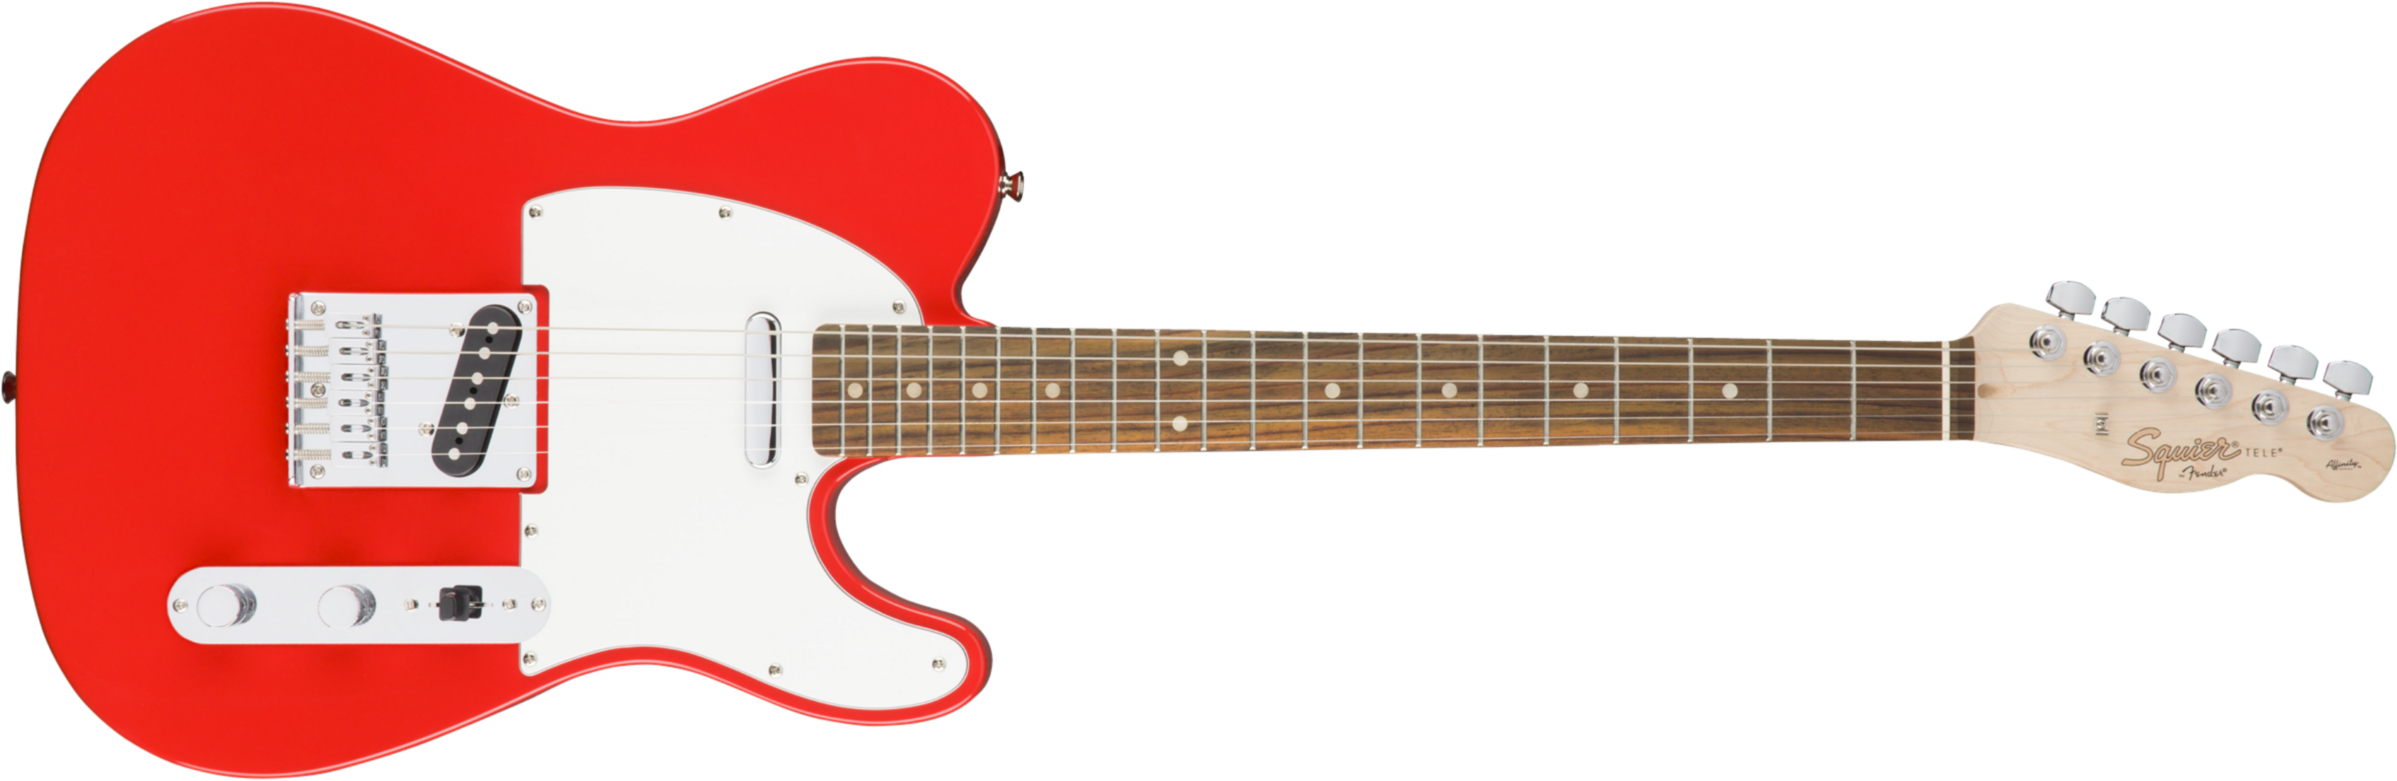 Squier Tele Affinity Series 2019 Lau - Race Red - Guitarra eléctrica con forma de tel - Main picture